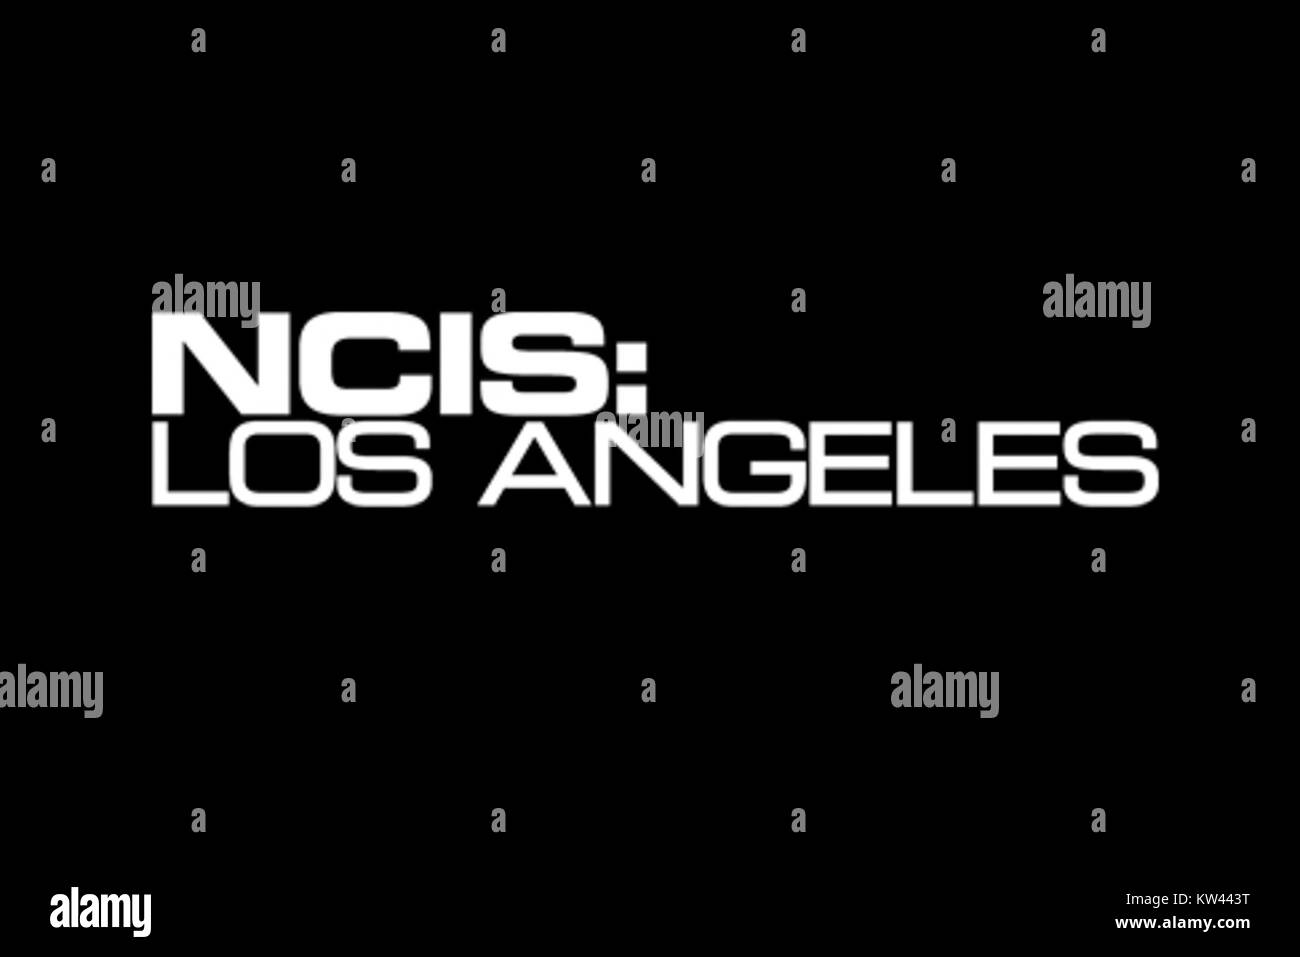 NCIS Los Angeles Stock Photo